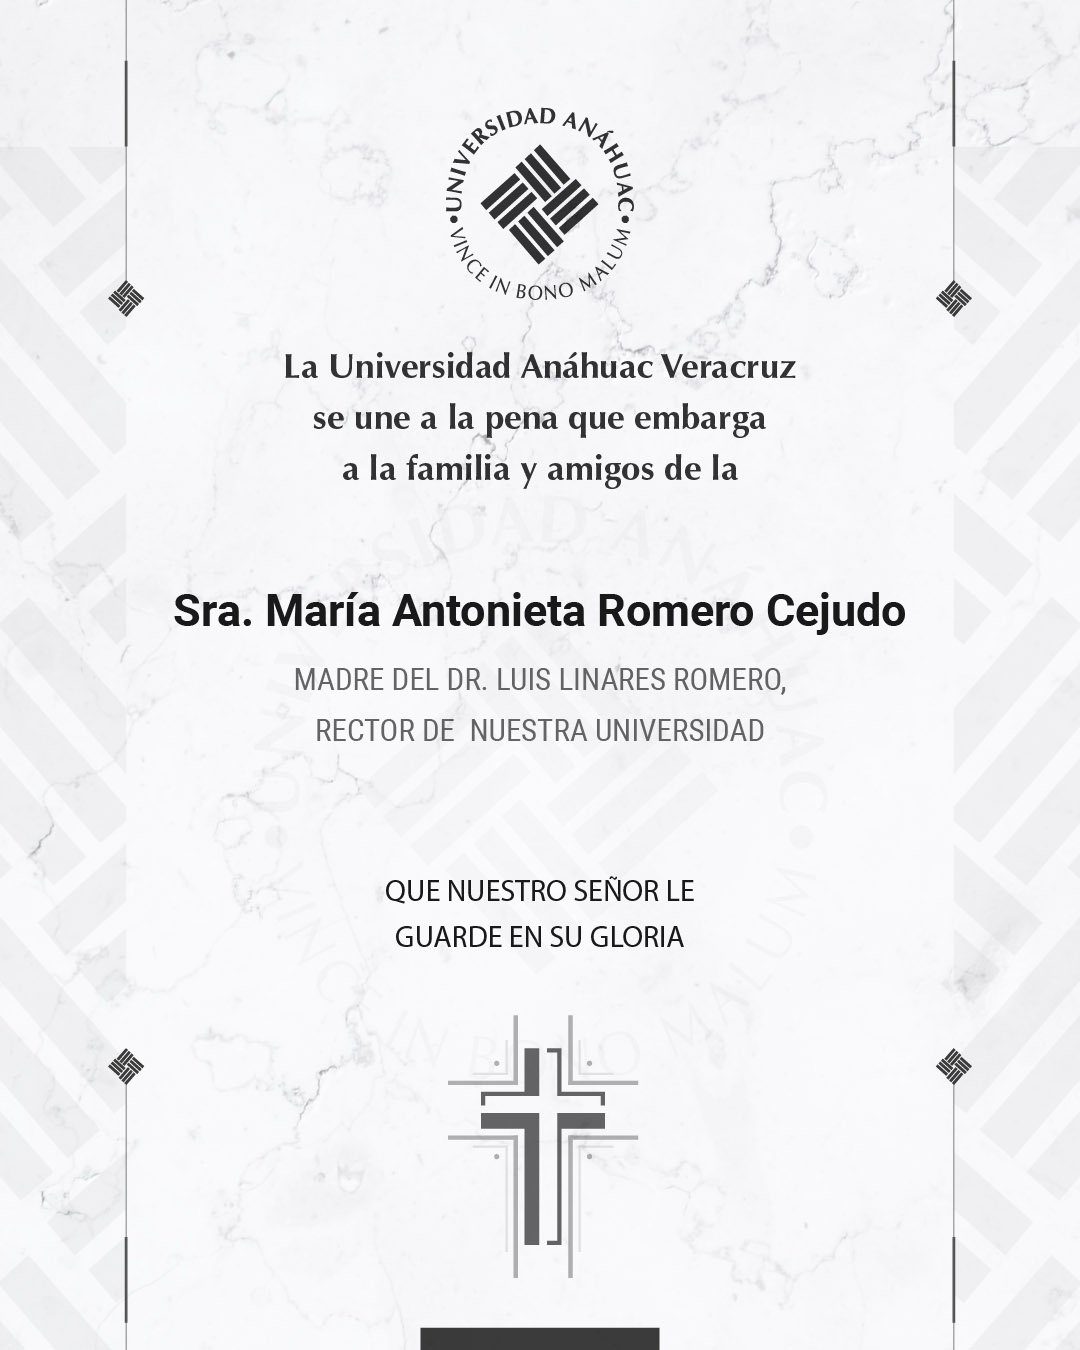 2 / 17 - Sra. María Antonieta Romero Cejudo